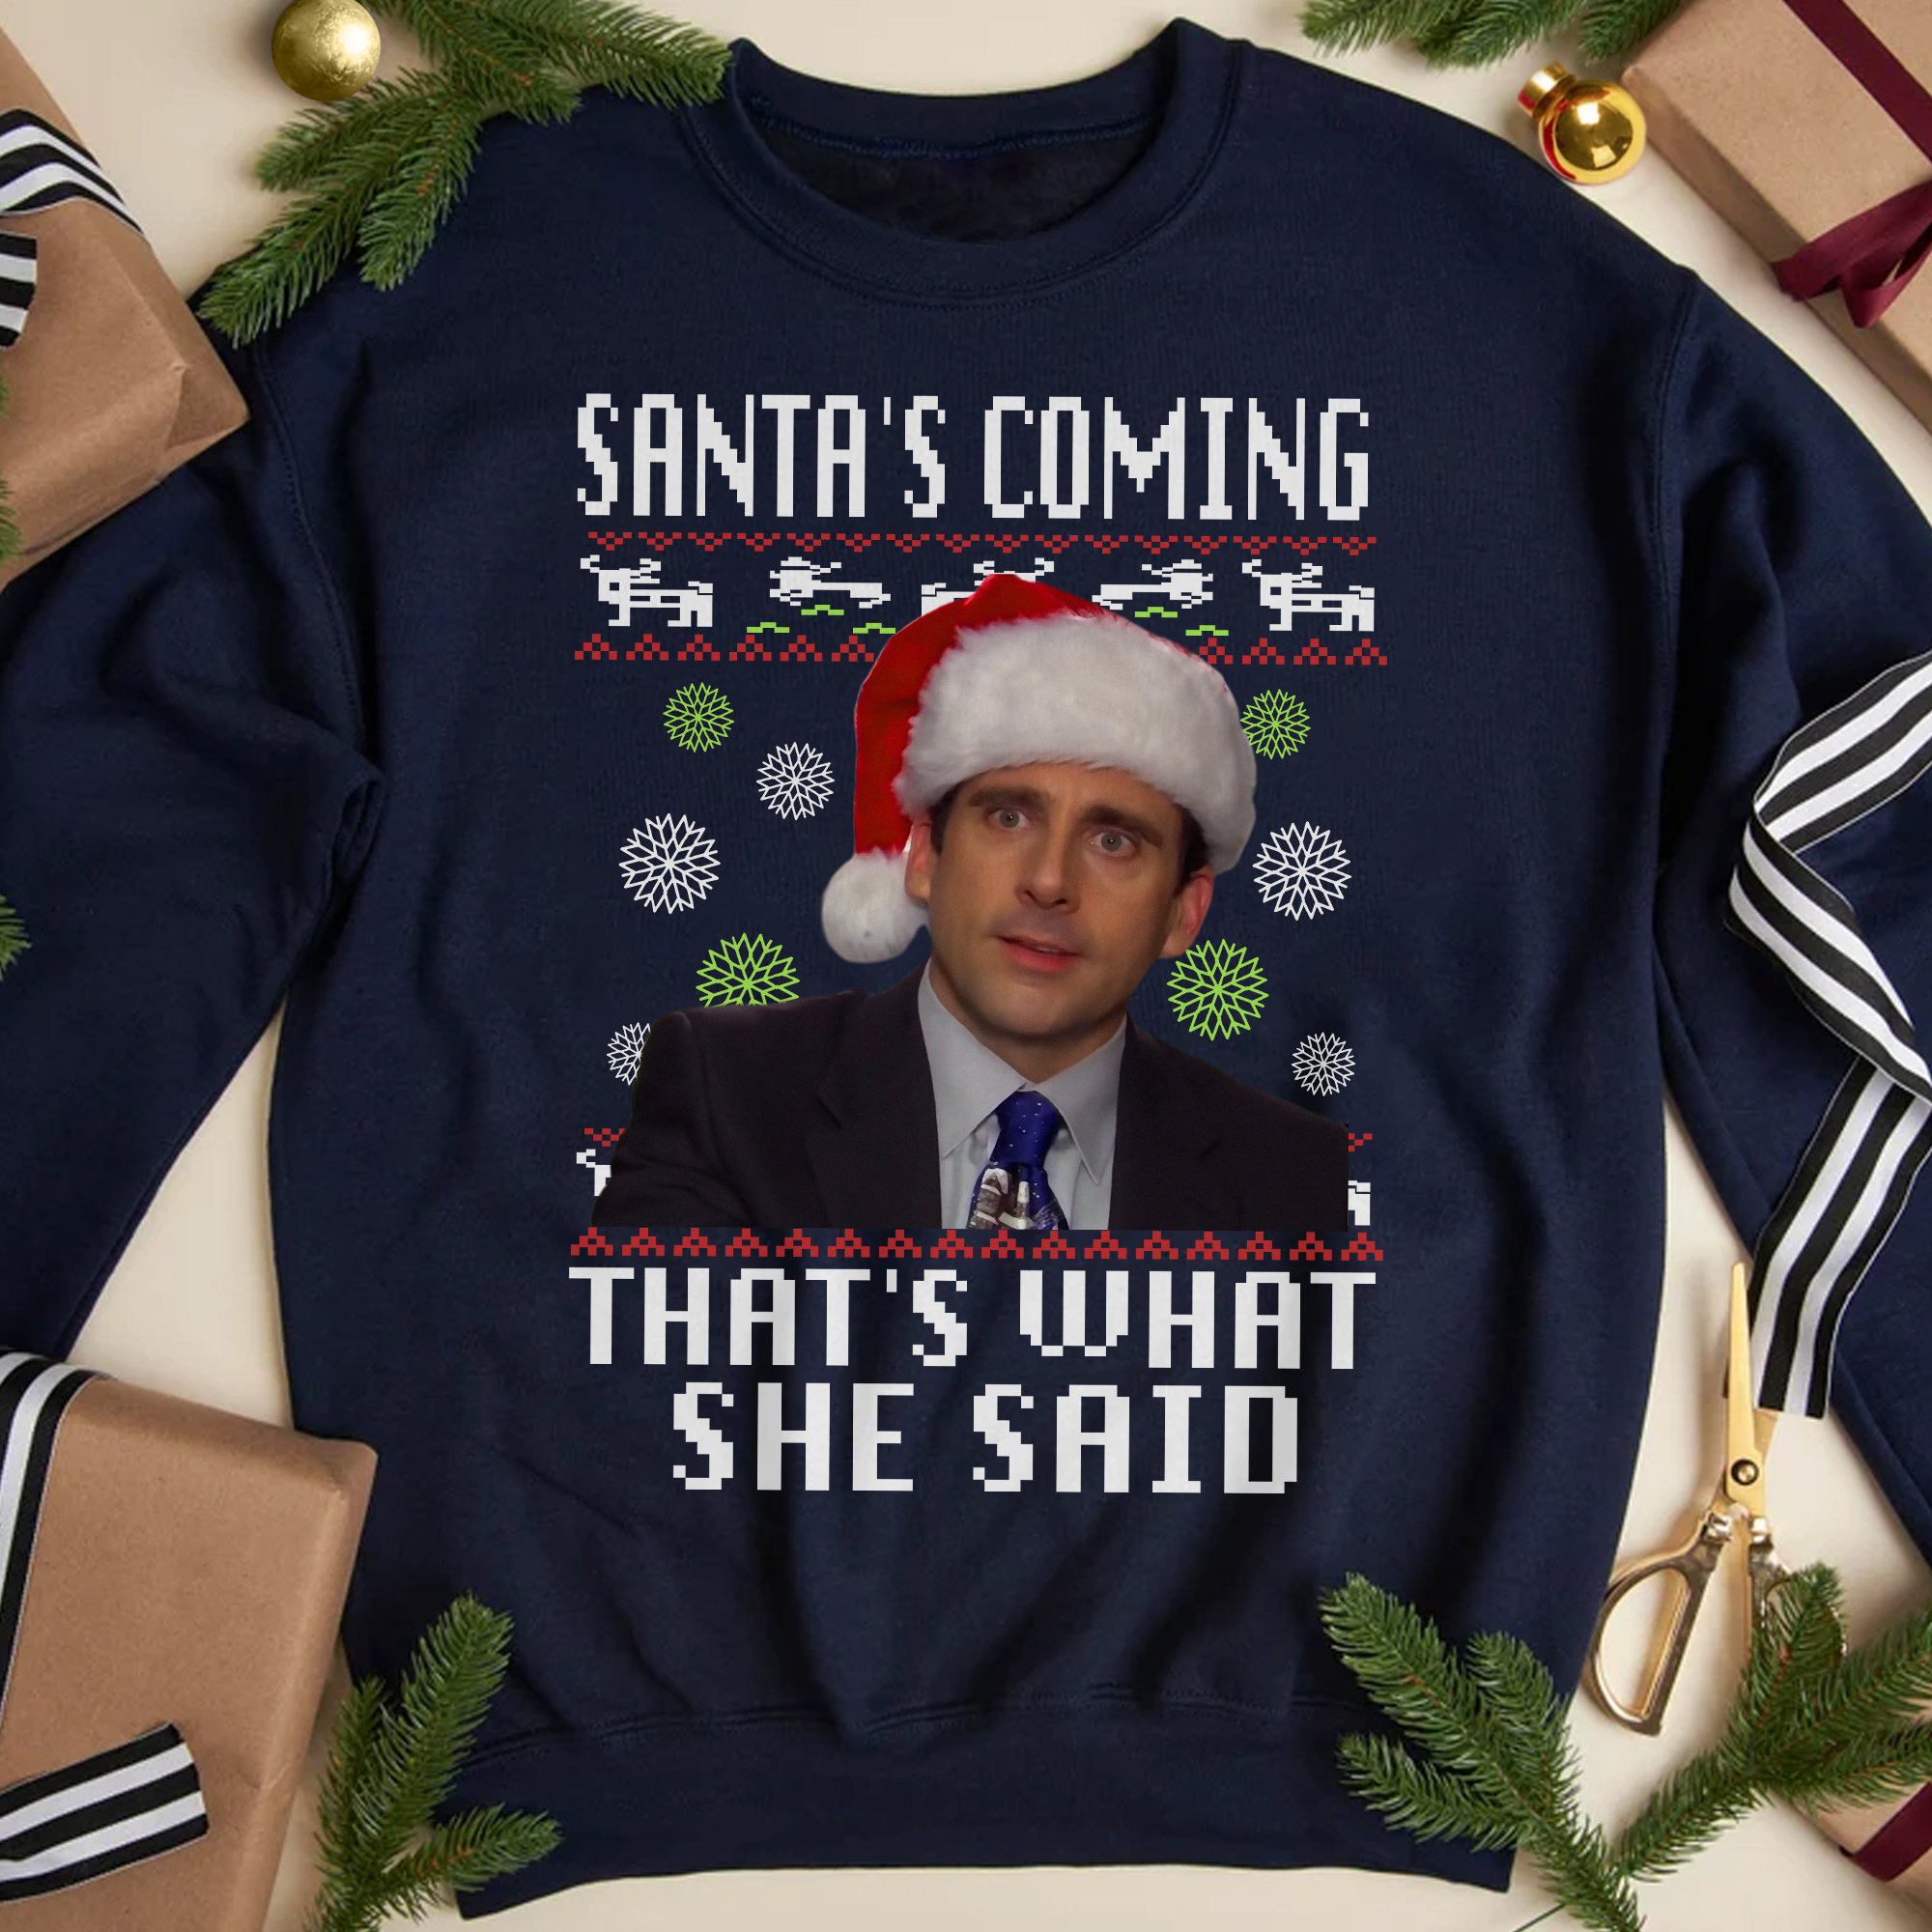 Discover The Office Christmas Ugly Sweatshirt, Santa's Coming That What She Said Vintage Sweatshirt, Michael Scott Funny Xmas Graphic Sweatshirt Gift LK628